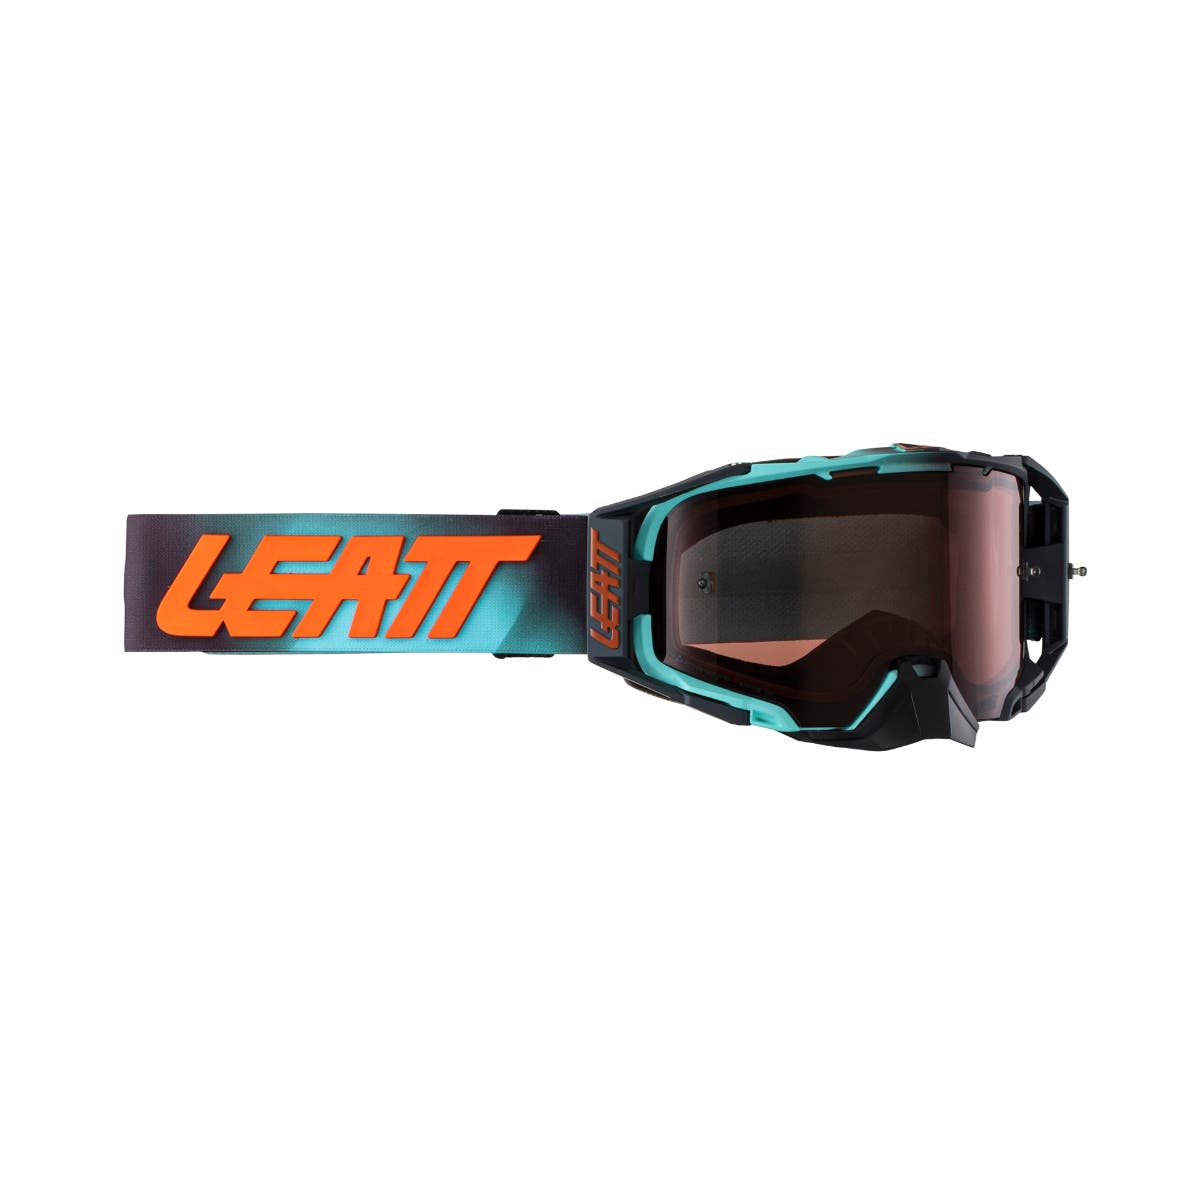 Leatt - Velocity 6.5 Goggles